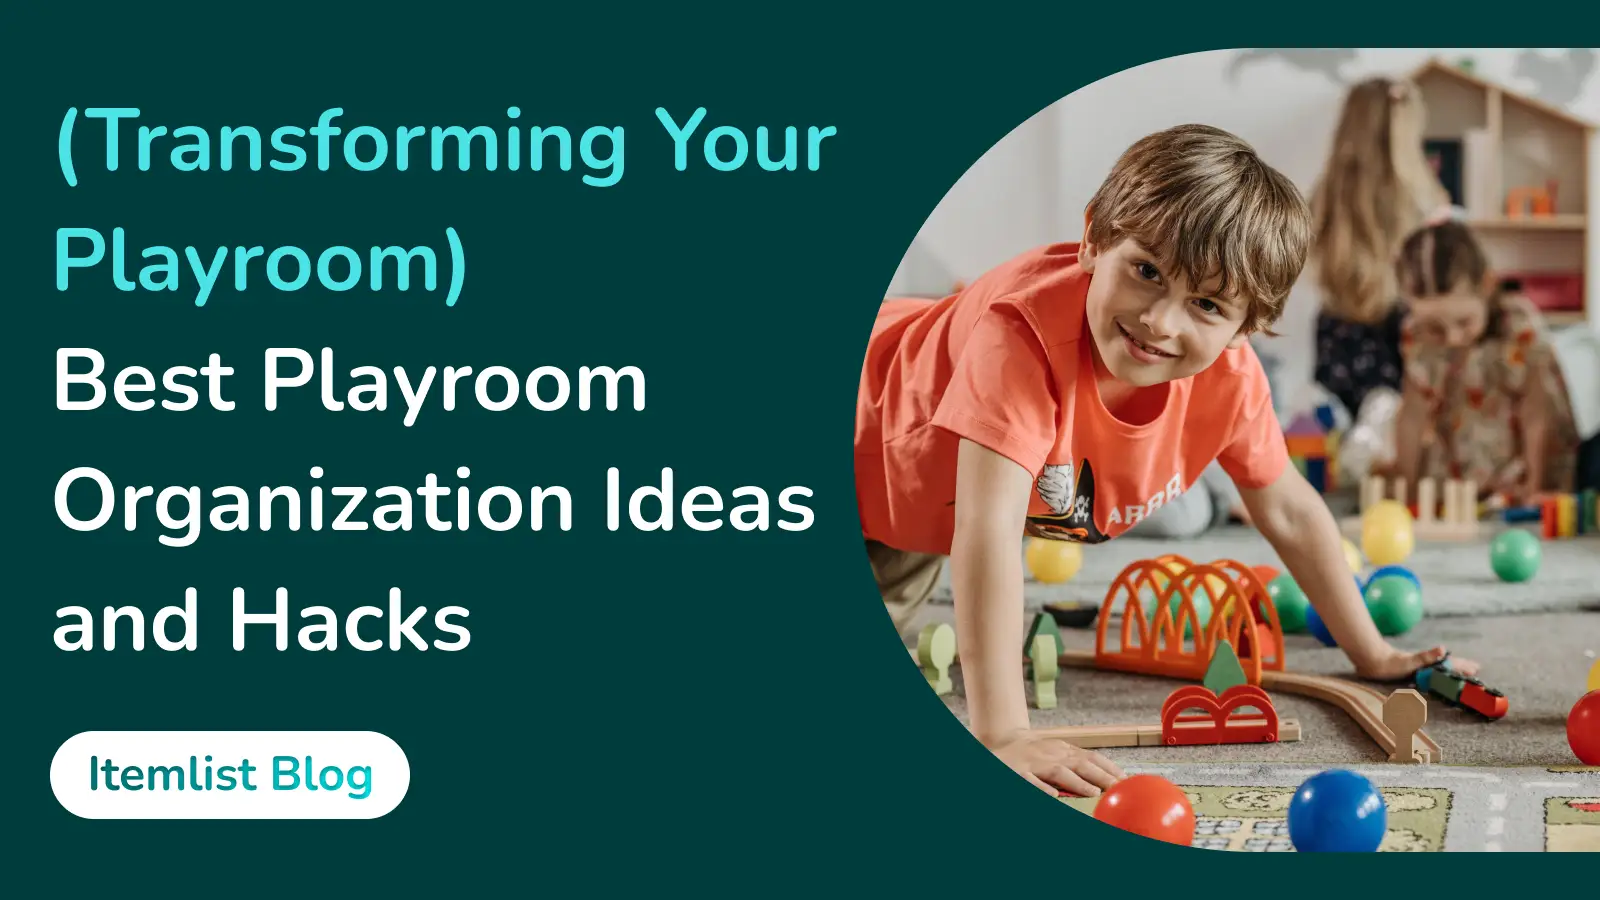 (Transforming Your Playroom) Best Playroom Organization Ideas and Hacks